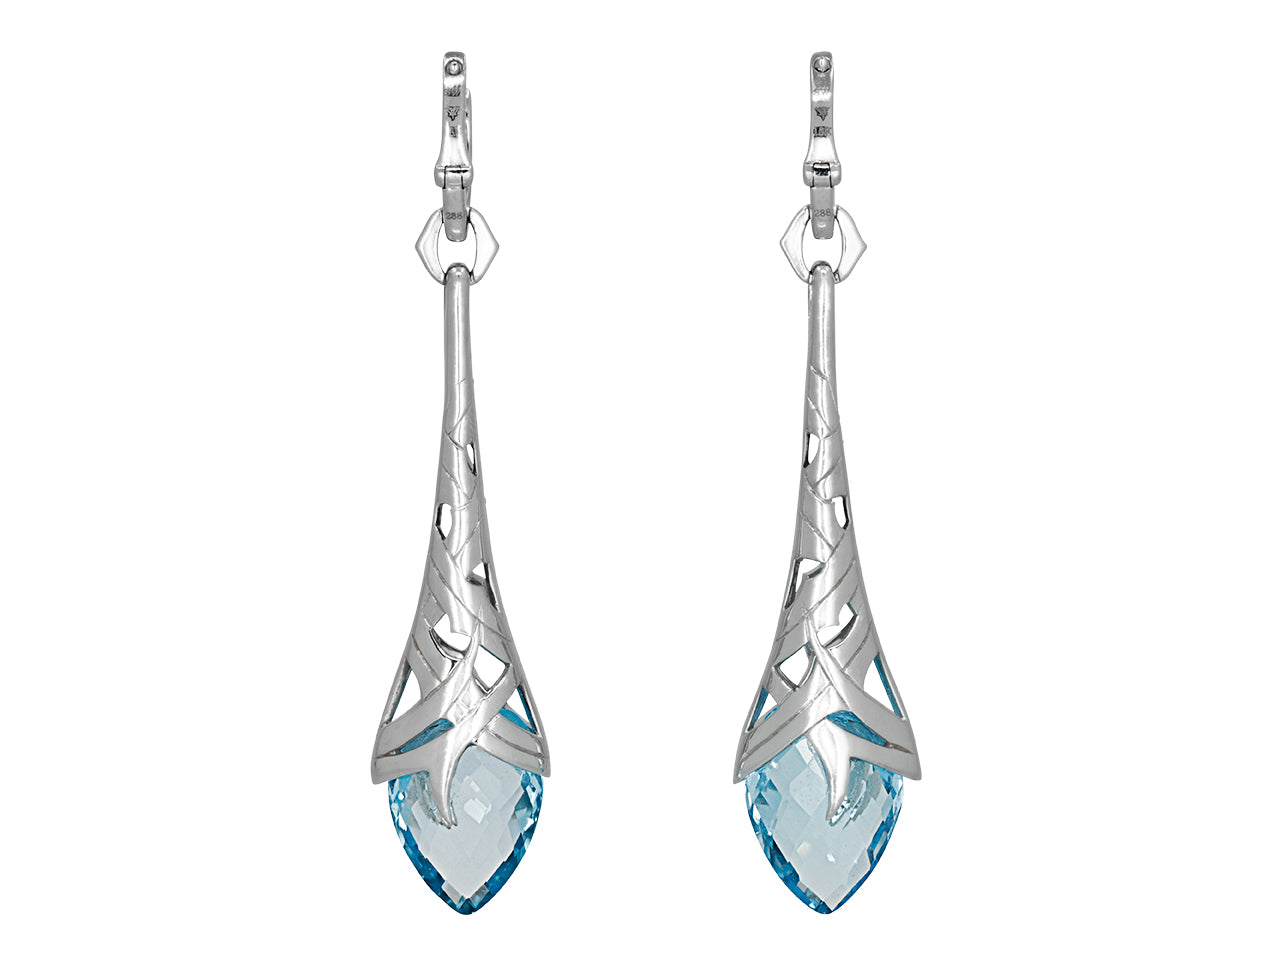 Stephen Webster Diamond and Blue Topaz Drop Earrings in 18K White Gold